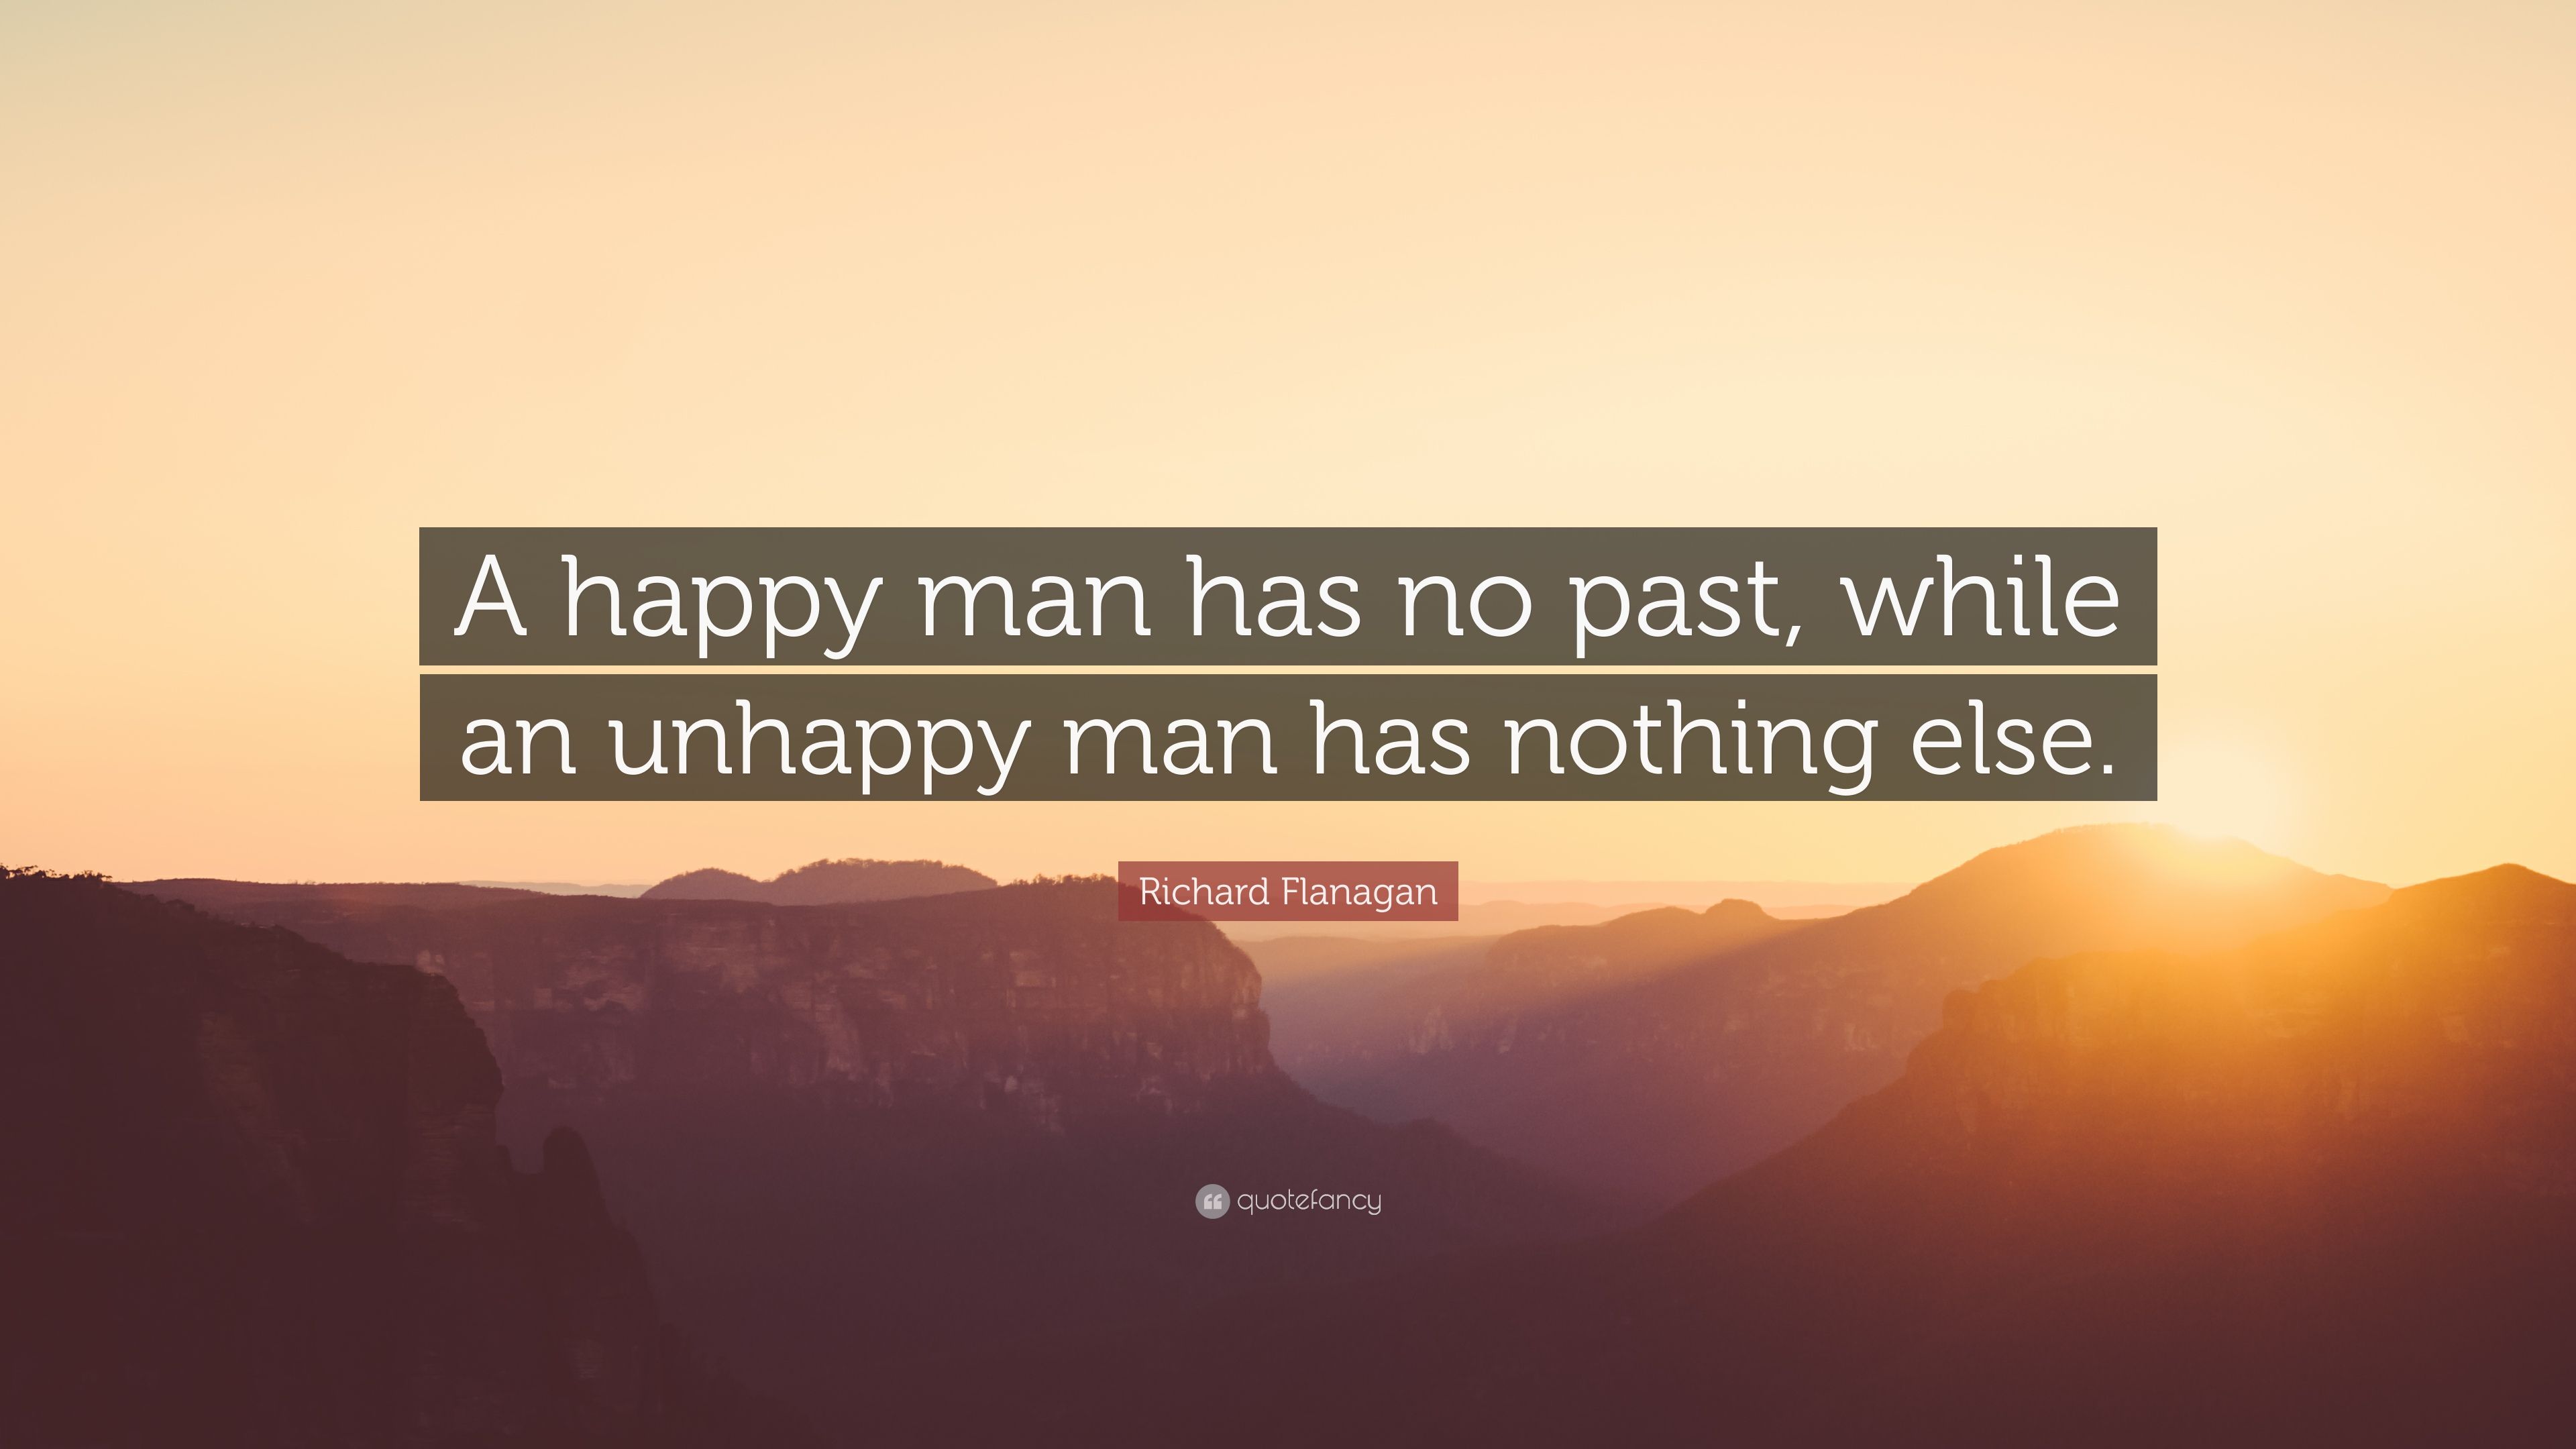 Richard Flanagan Quote: “A happy man has no past, while an unhappy